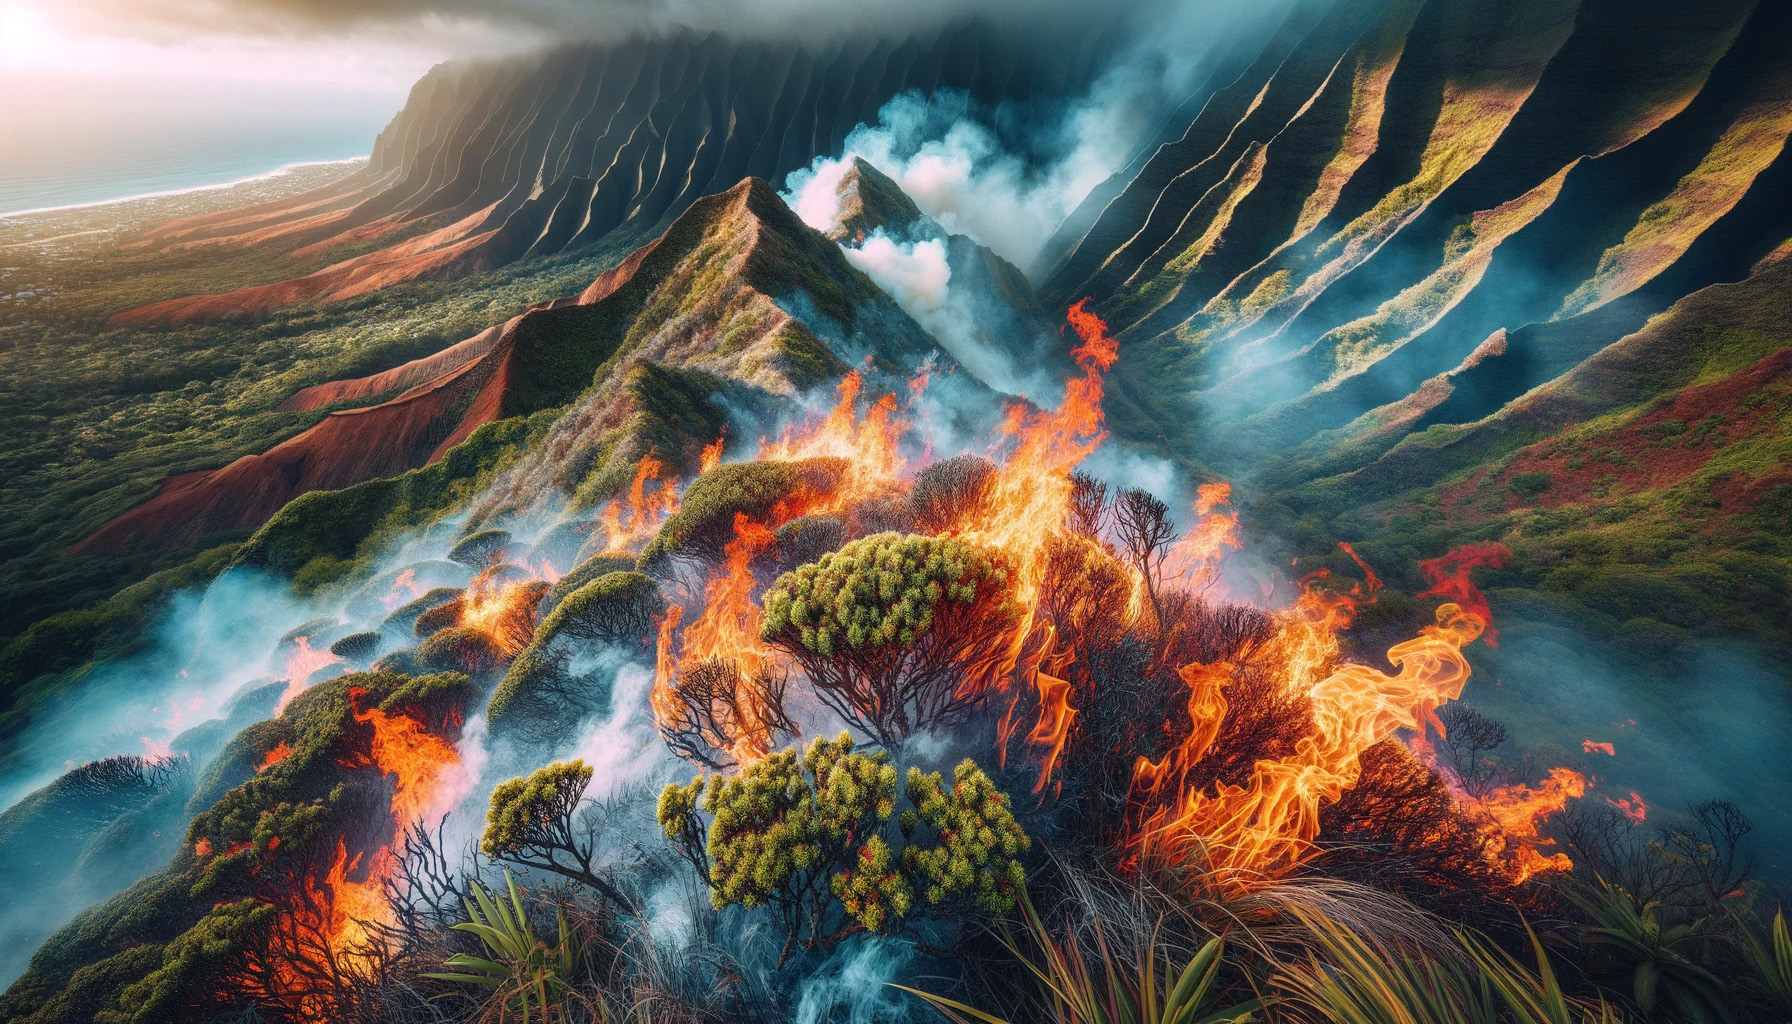 Brushfire in Hawaii - AI Generated Image